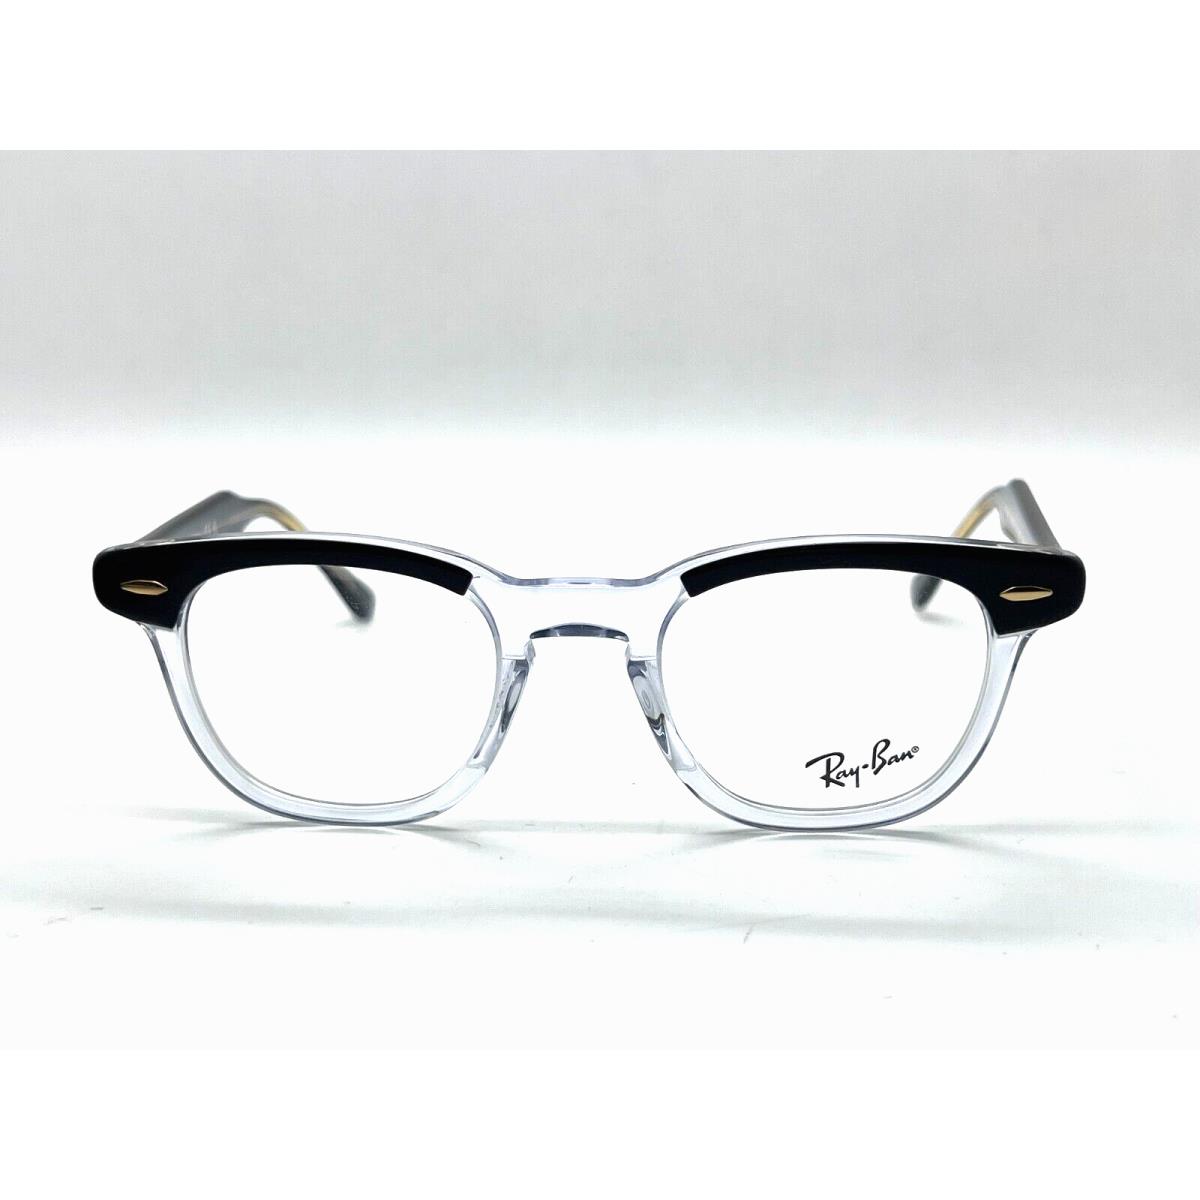 Ray-Ban eyeglasses  - BLACK ON TRANSPARENT Frame